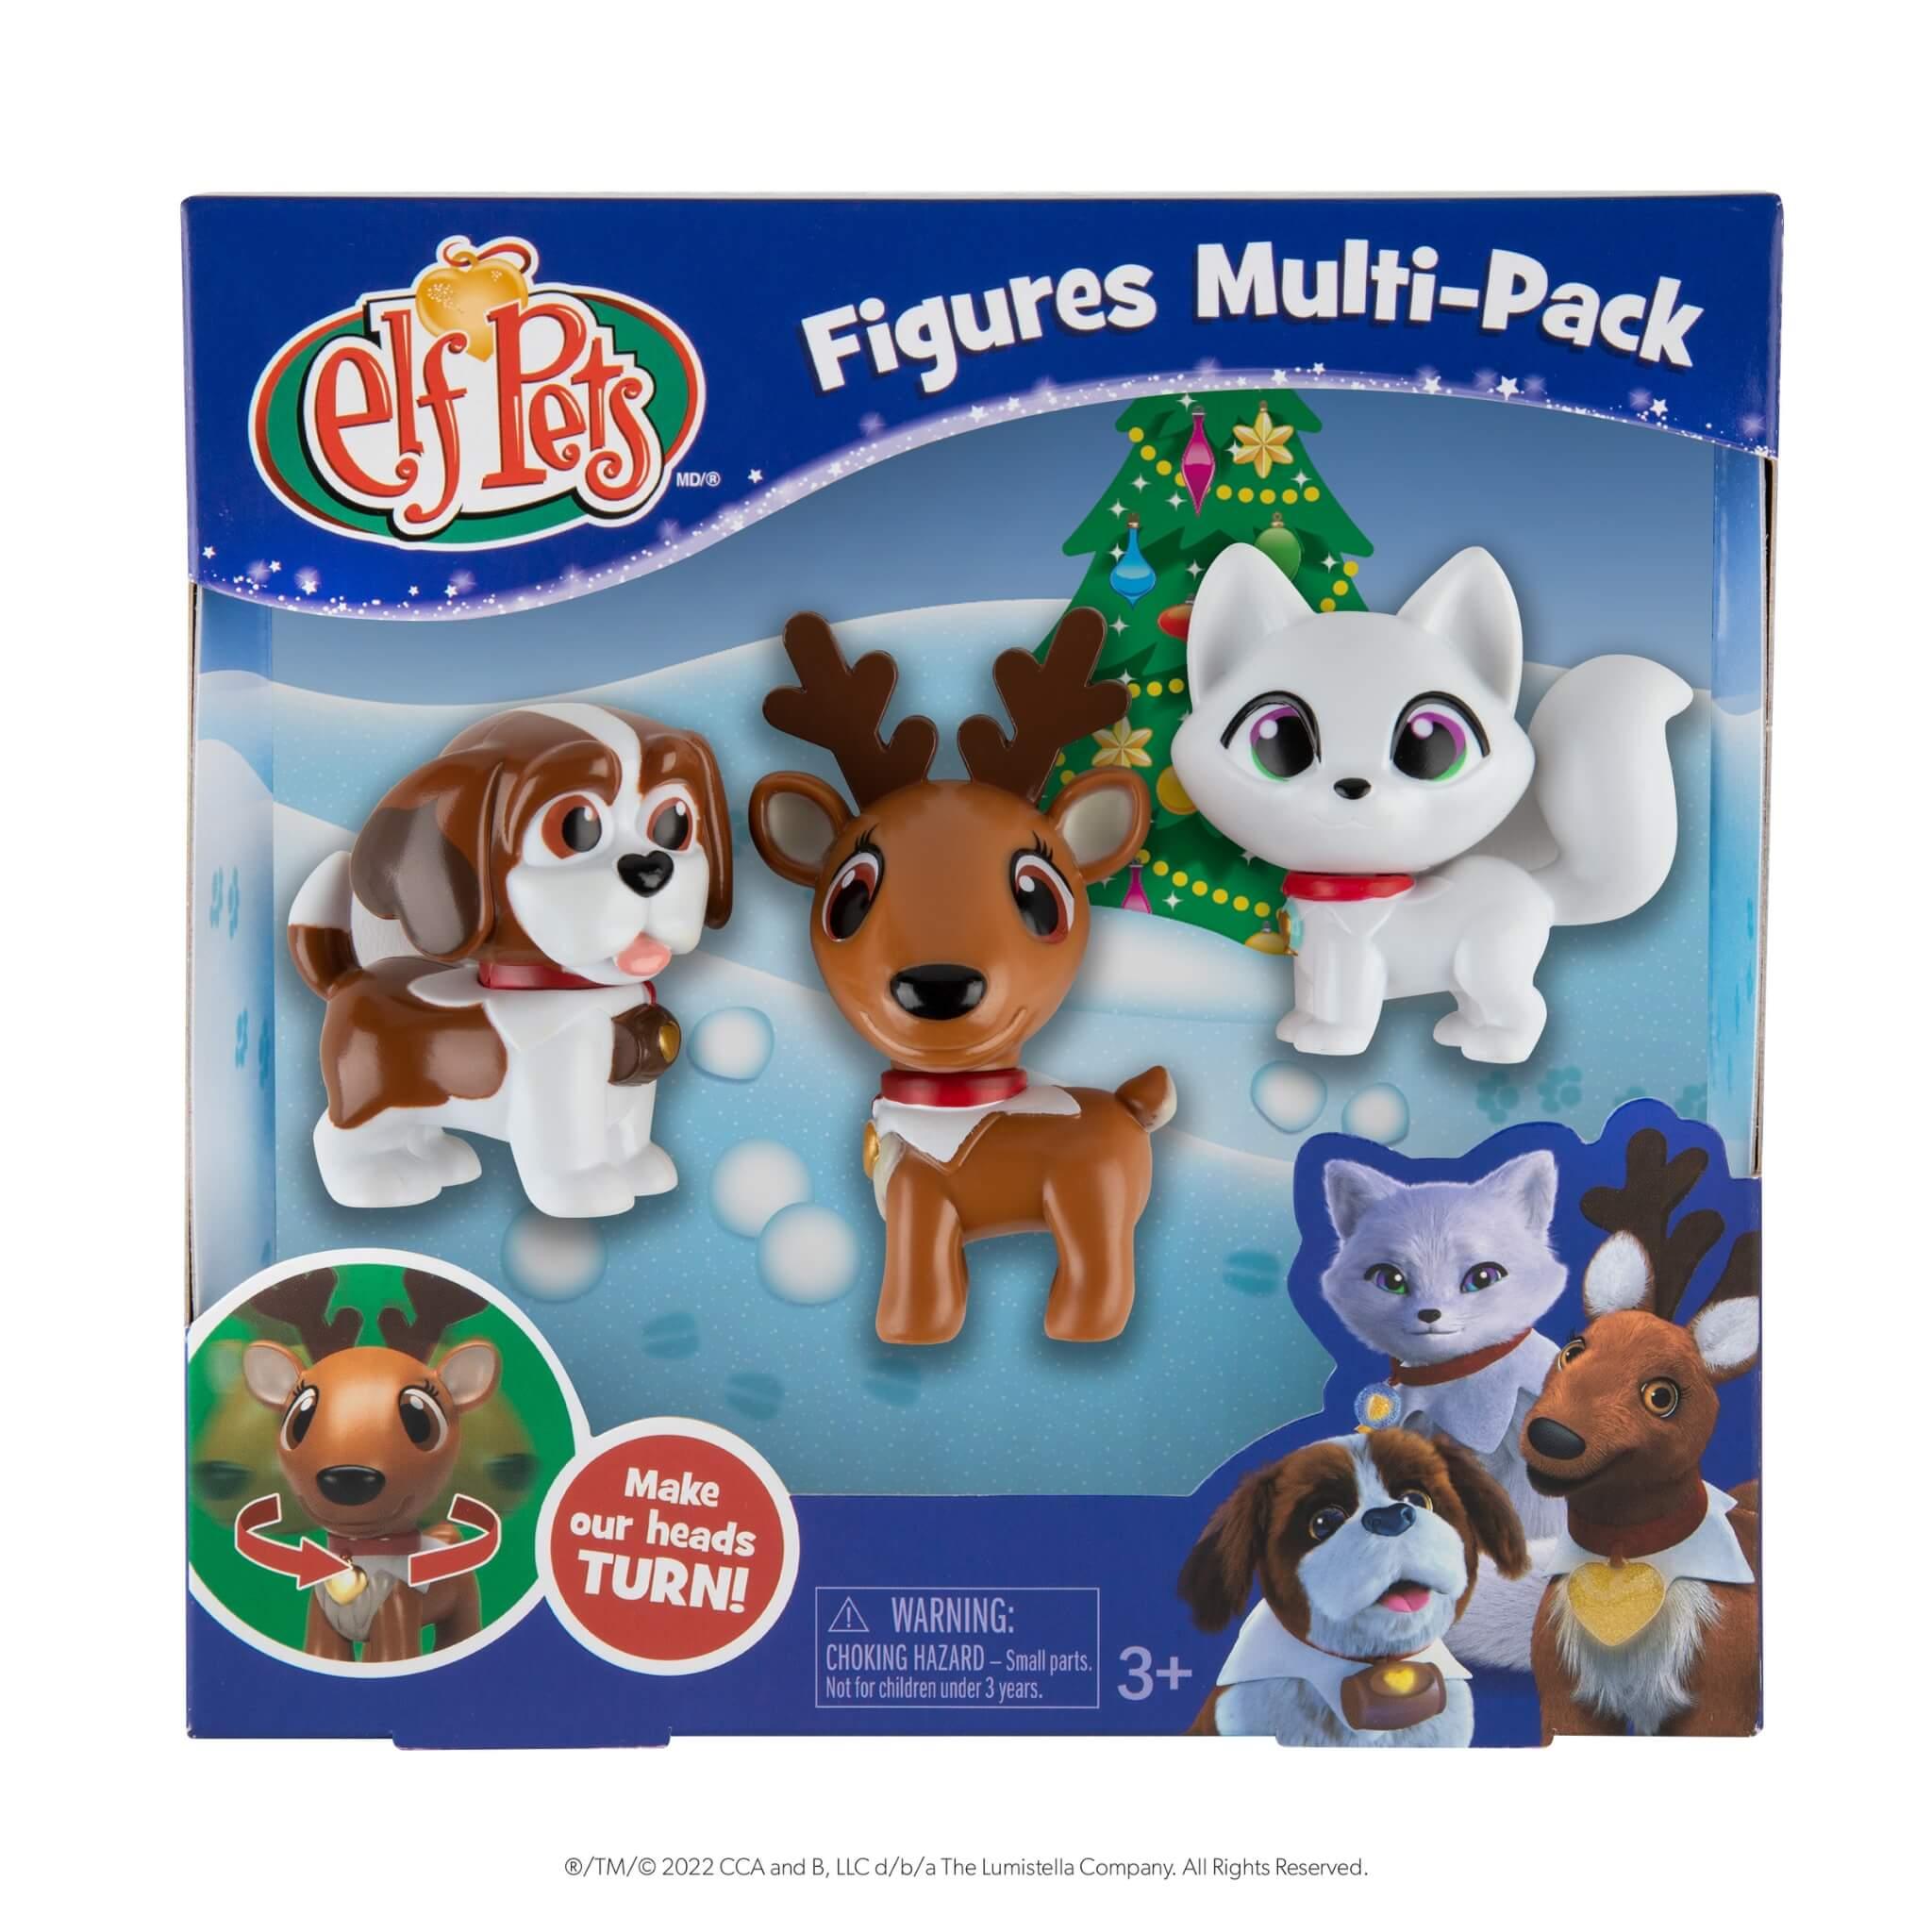 Elf Pets® Figures Multi-Pack - The Elf on The Shelf